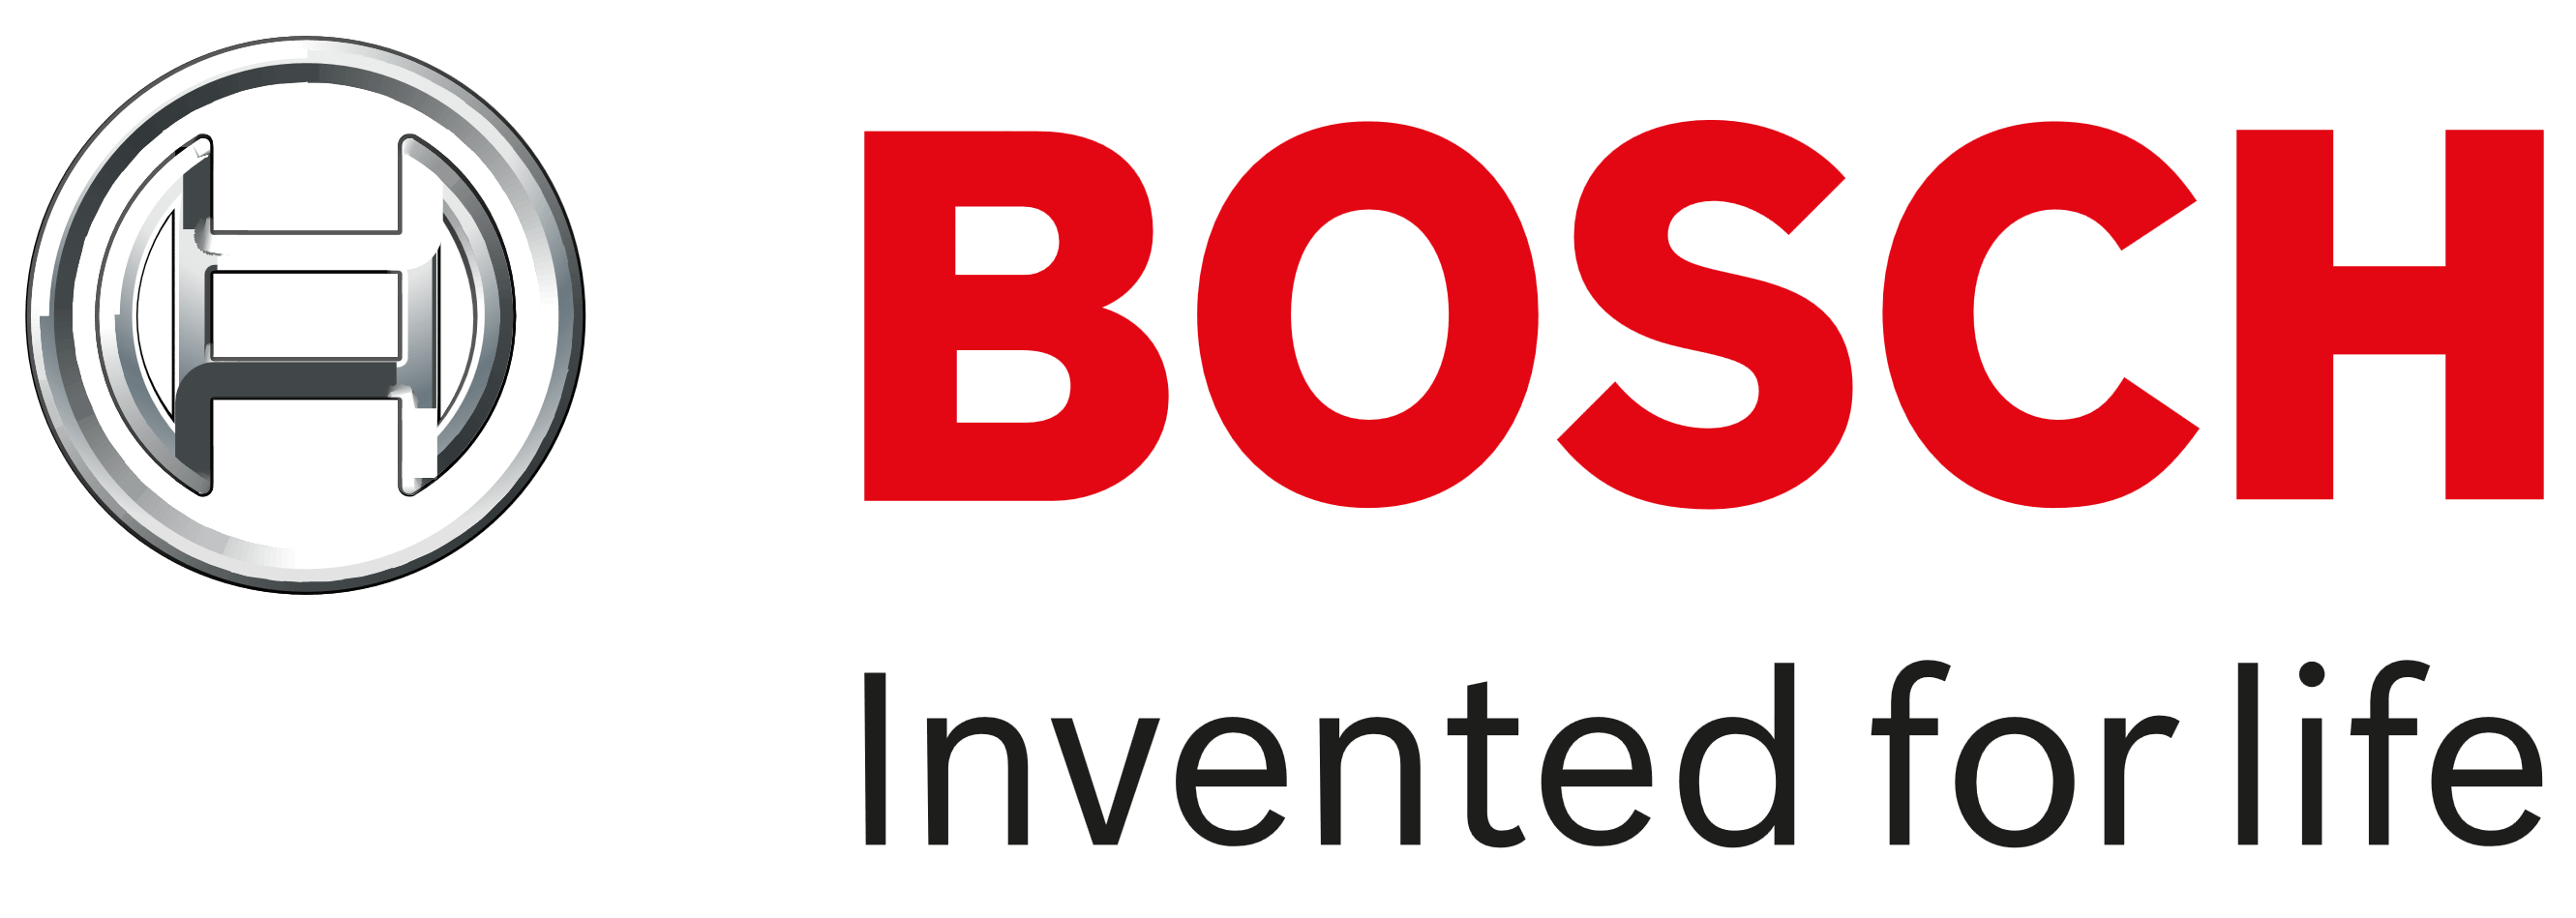 Bosch Logo PNG - 176171